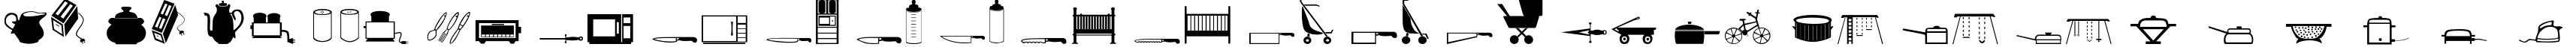 Пример написания английского алфавита шрифтом Household